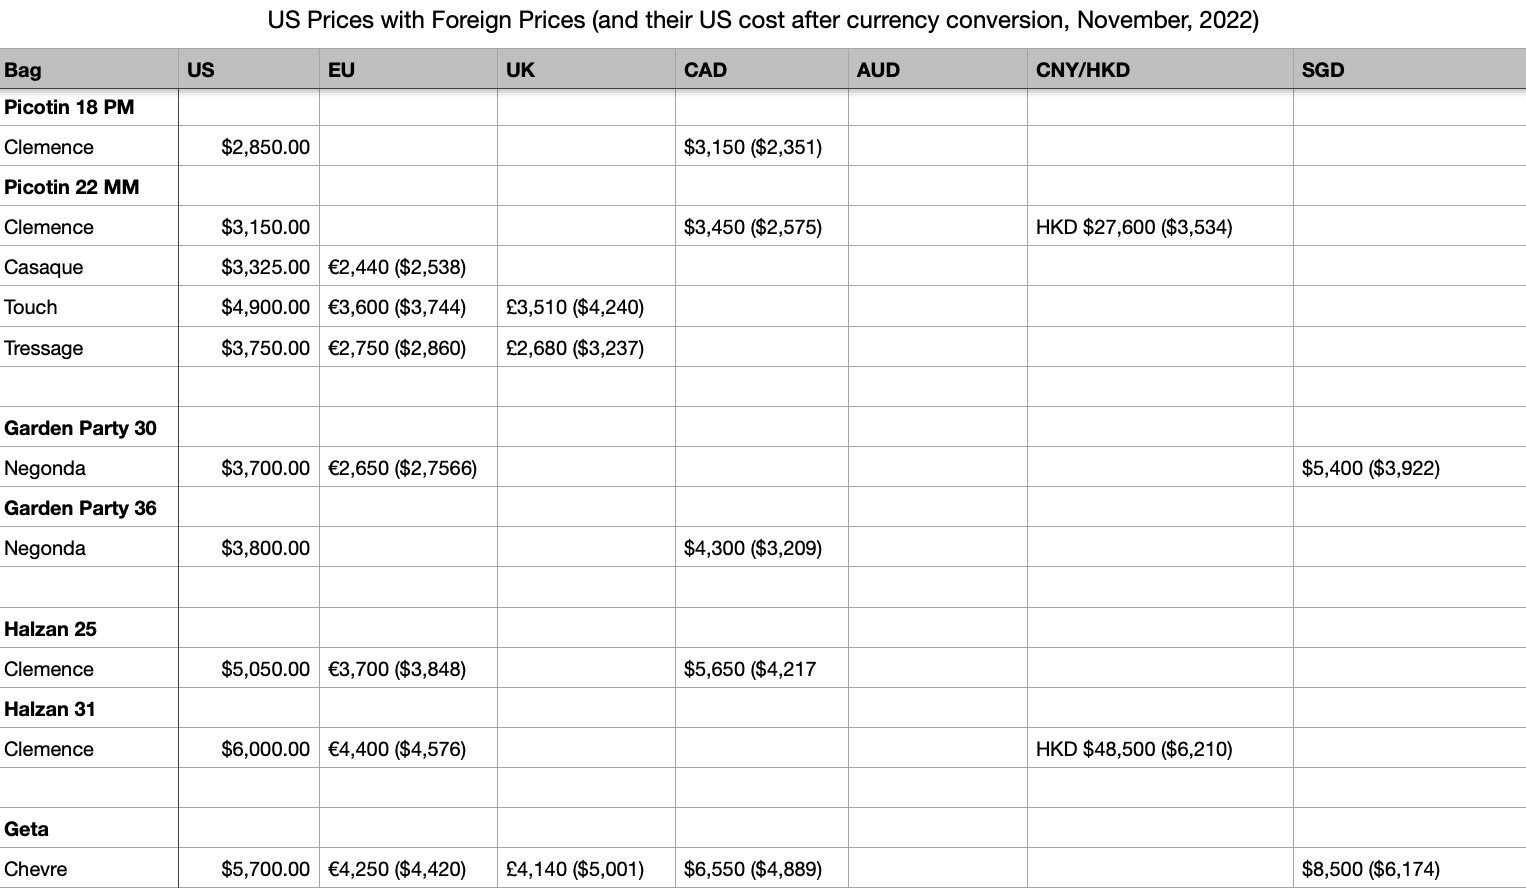 International Price Comparison, November 2022